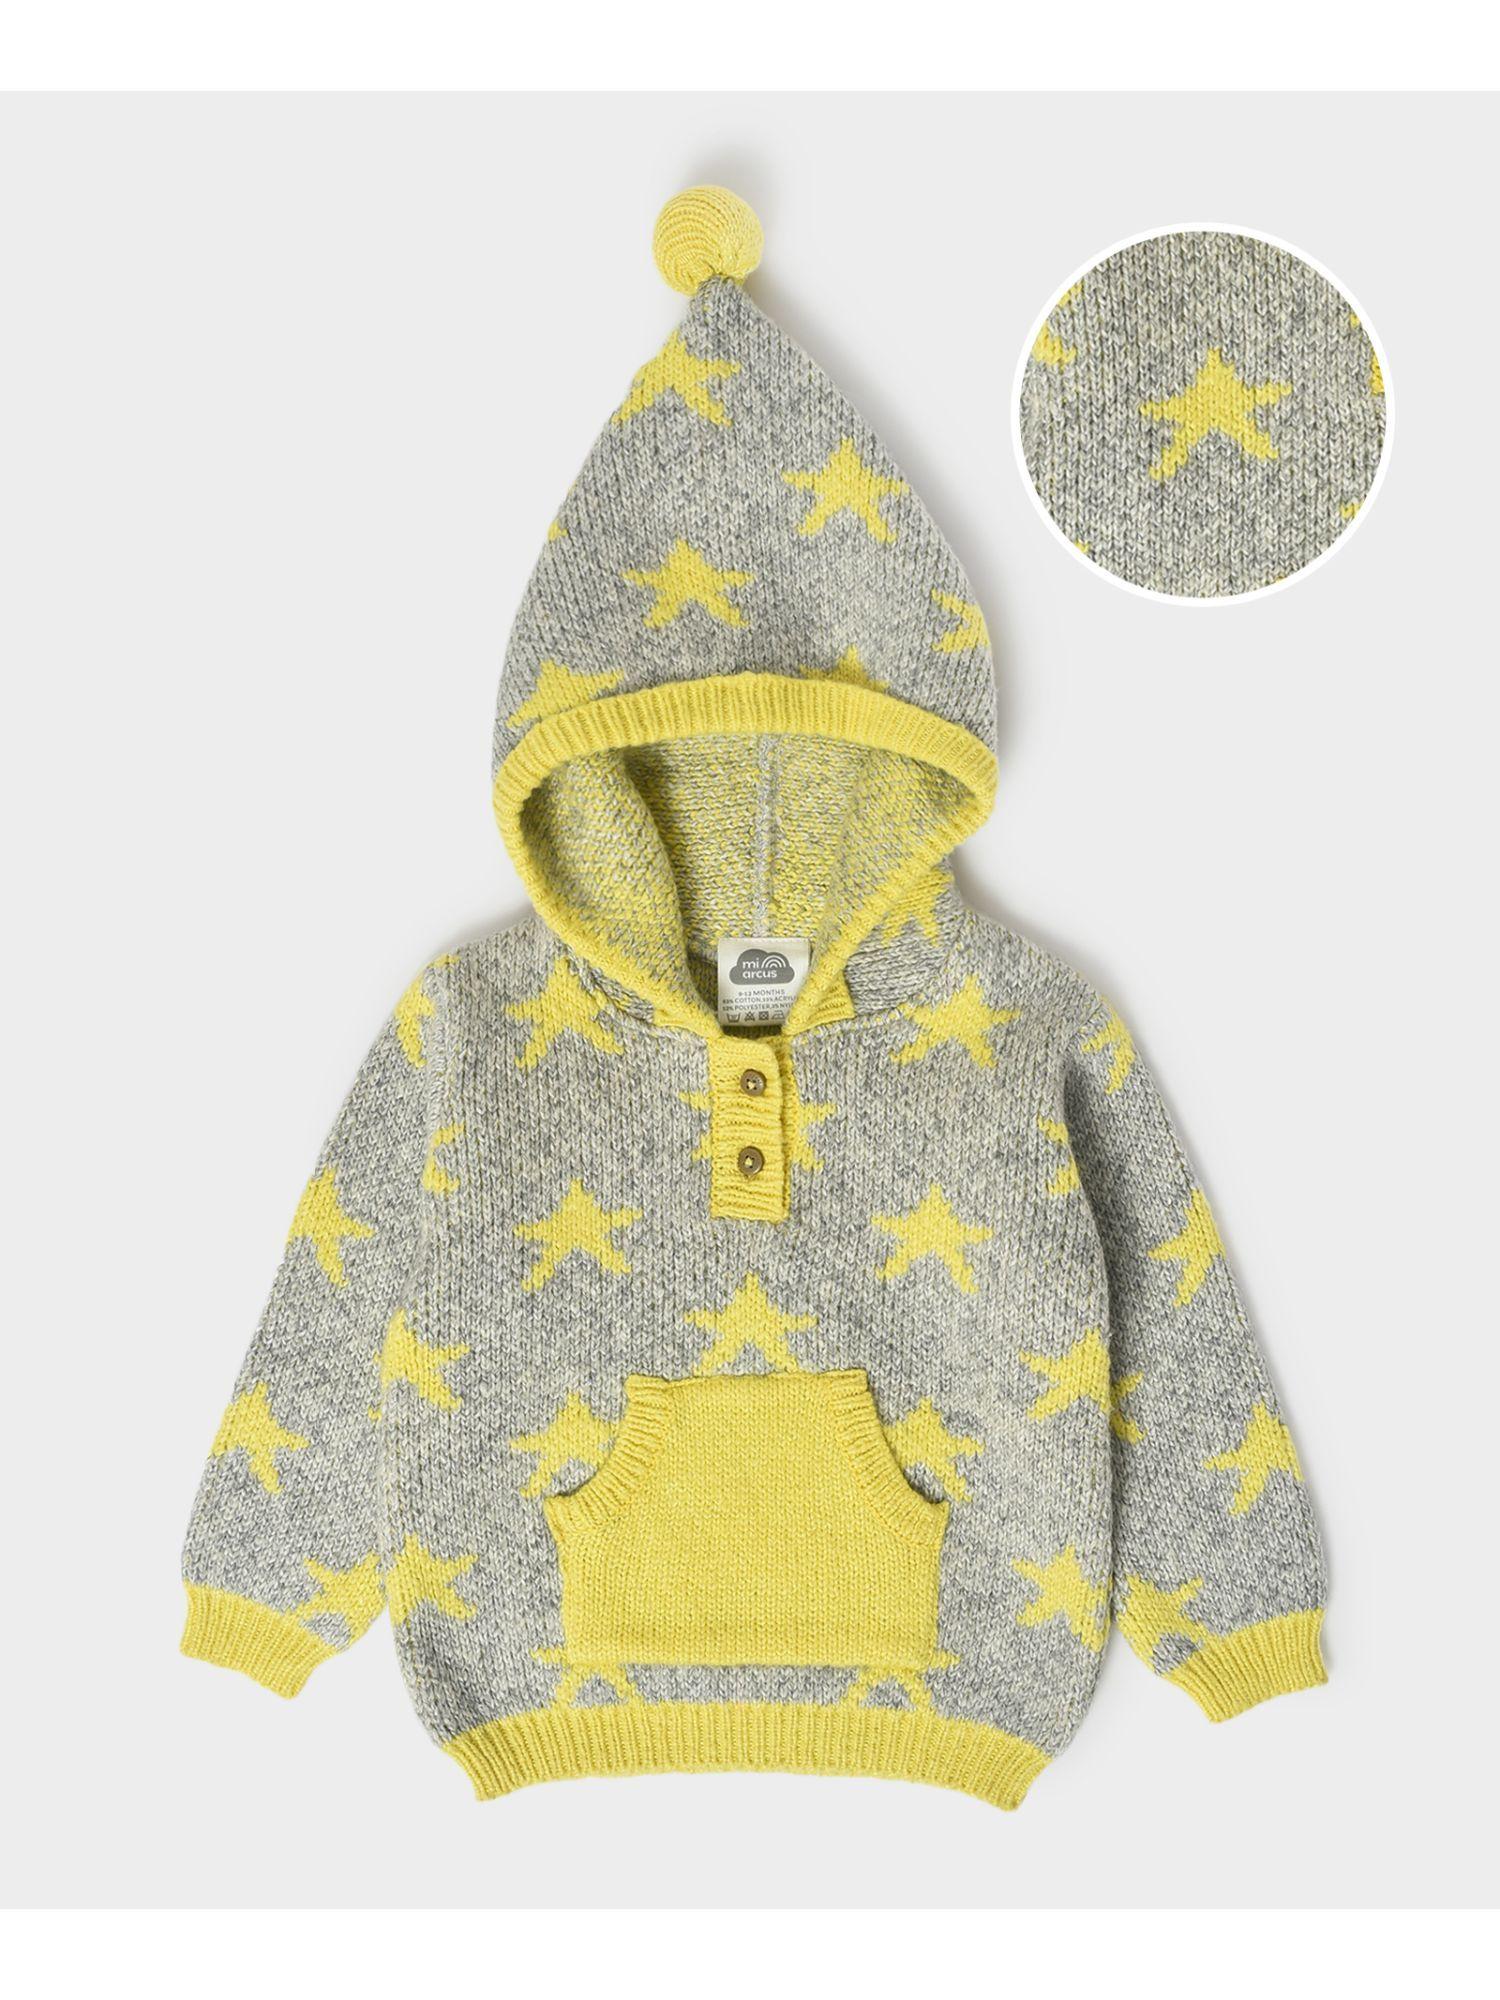 grey and yellow full sleeve hooded sweatshirt for kids